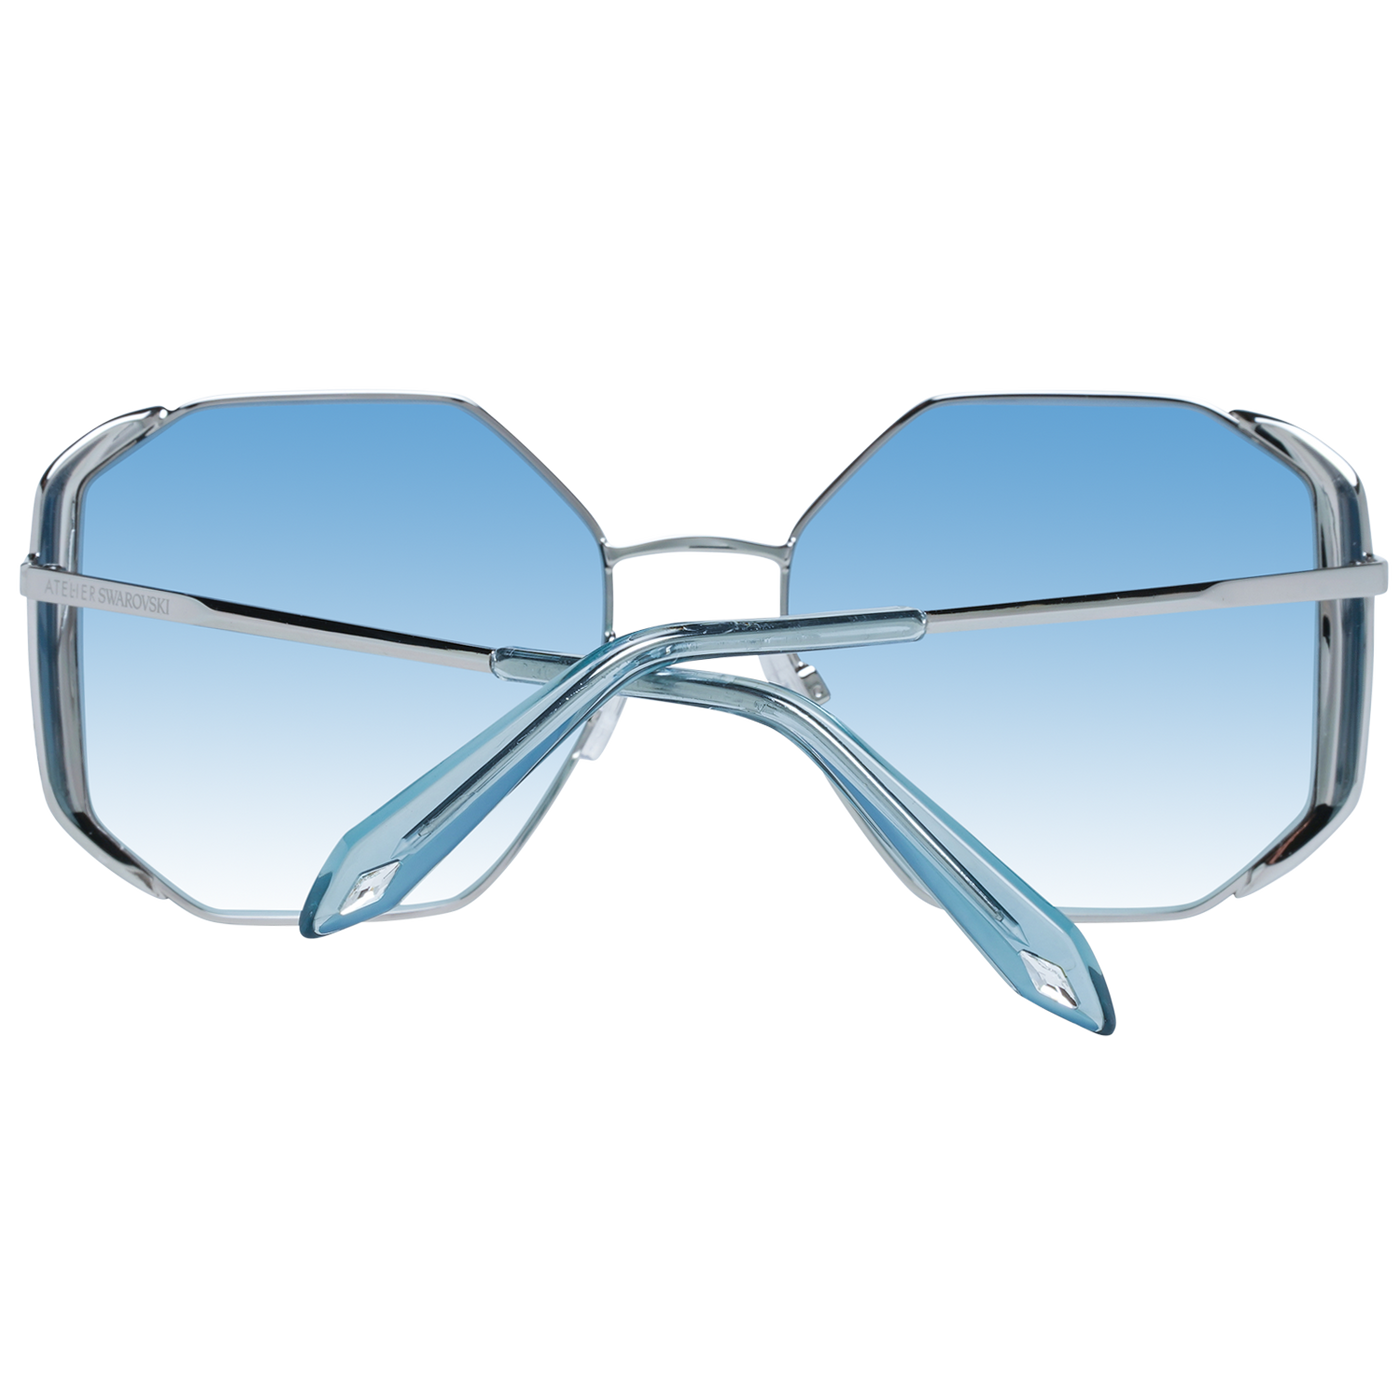 Atelier Swarovski Silver  Sunglasses